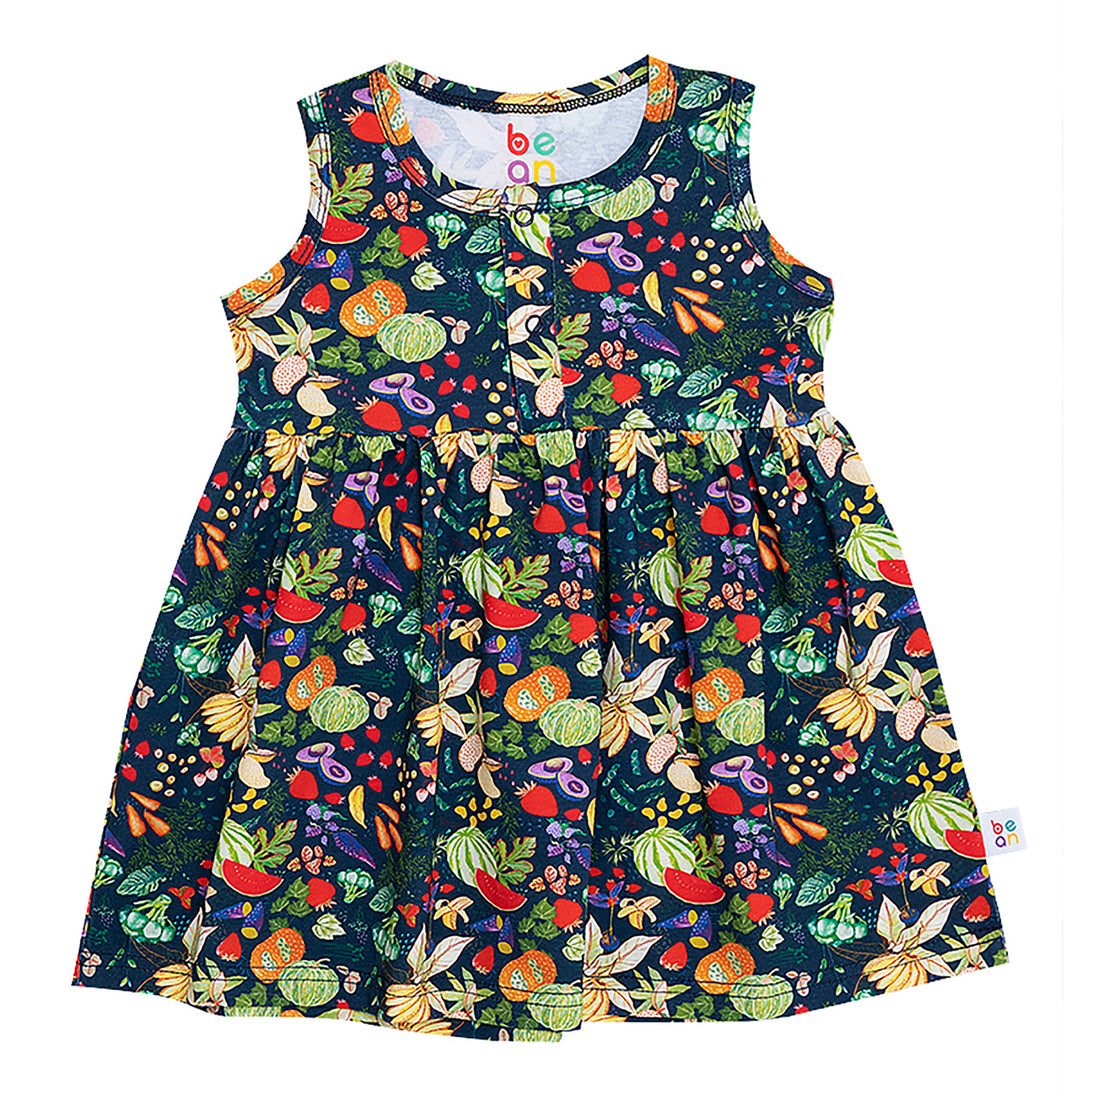 Wonder Playsuits Alessa Lanot Fruit Salad Dress with Bloomer Set